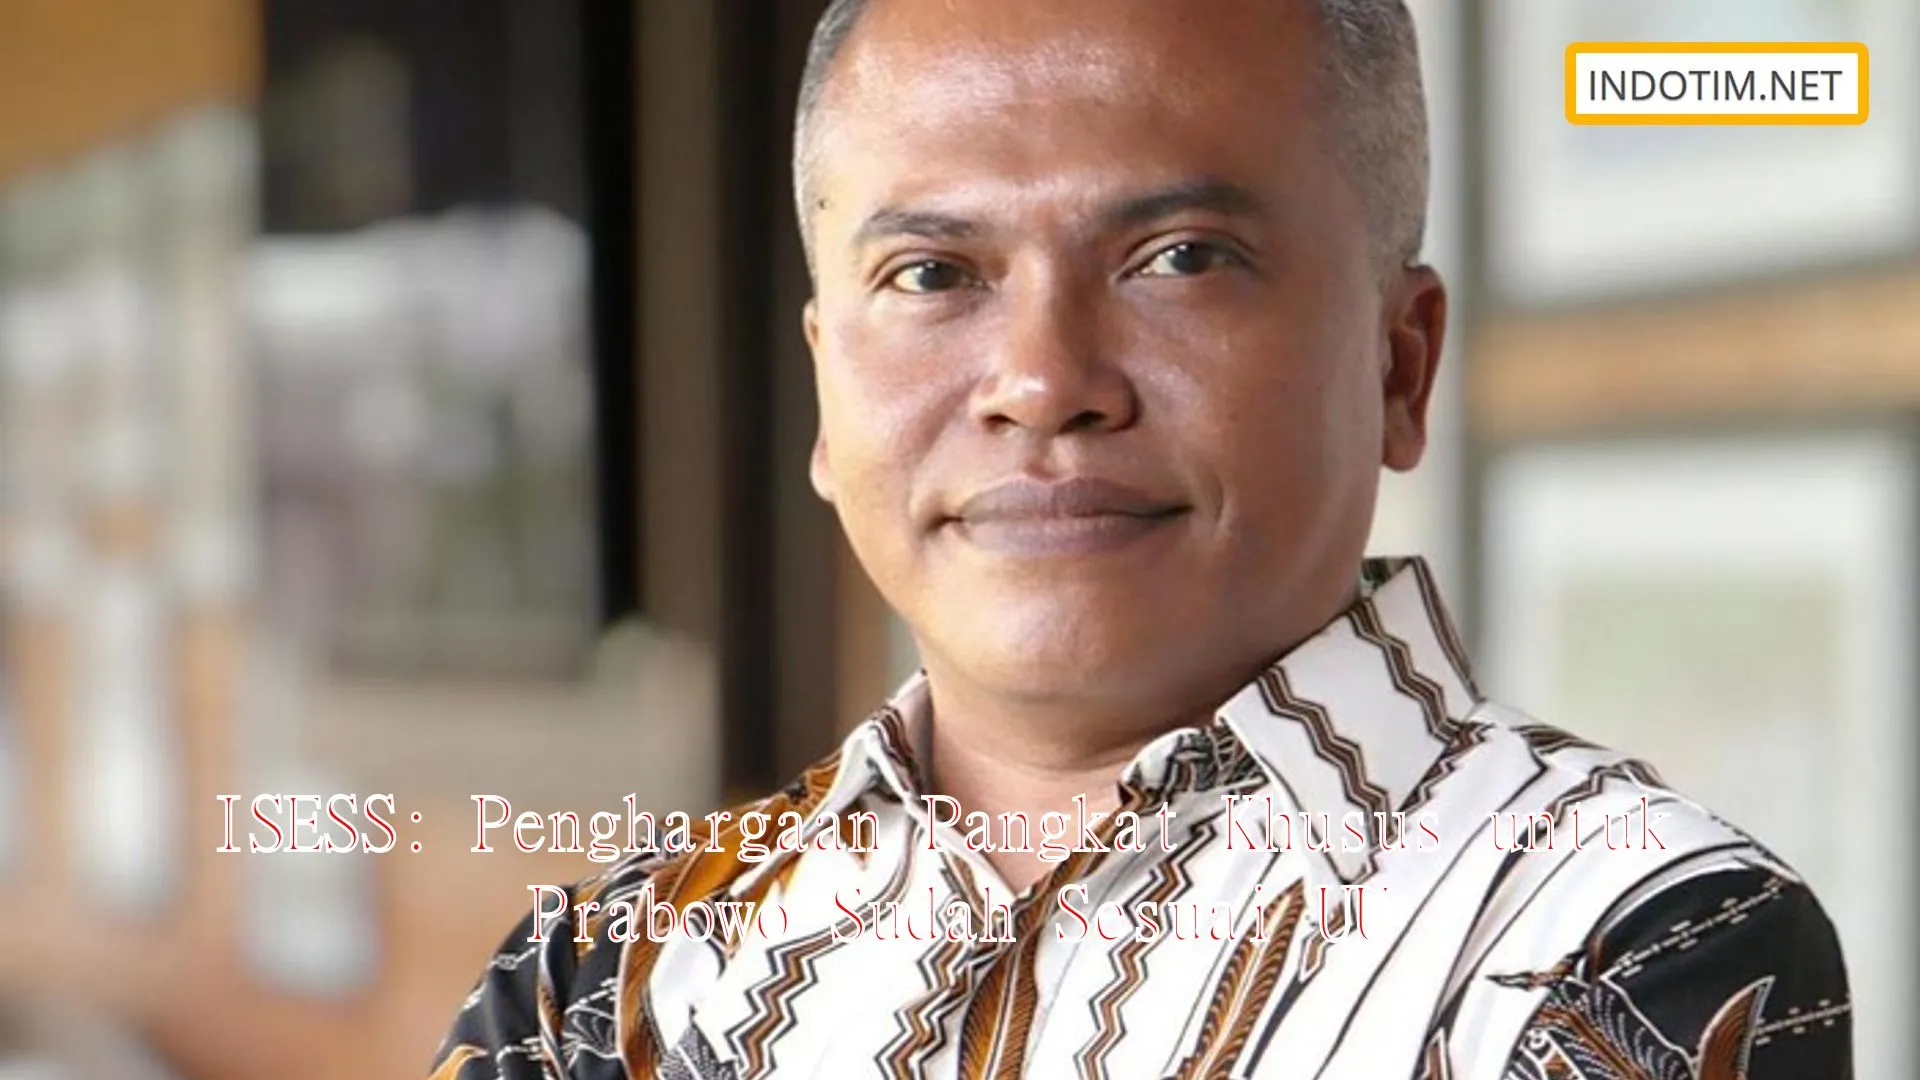 ISESS: Penghargaan Pangkat Khusus untuk Prabowo Sudah Sesuai UU